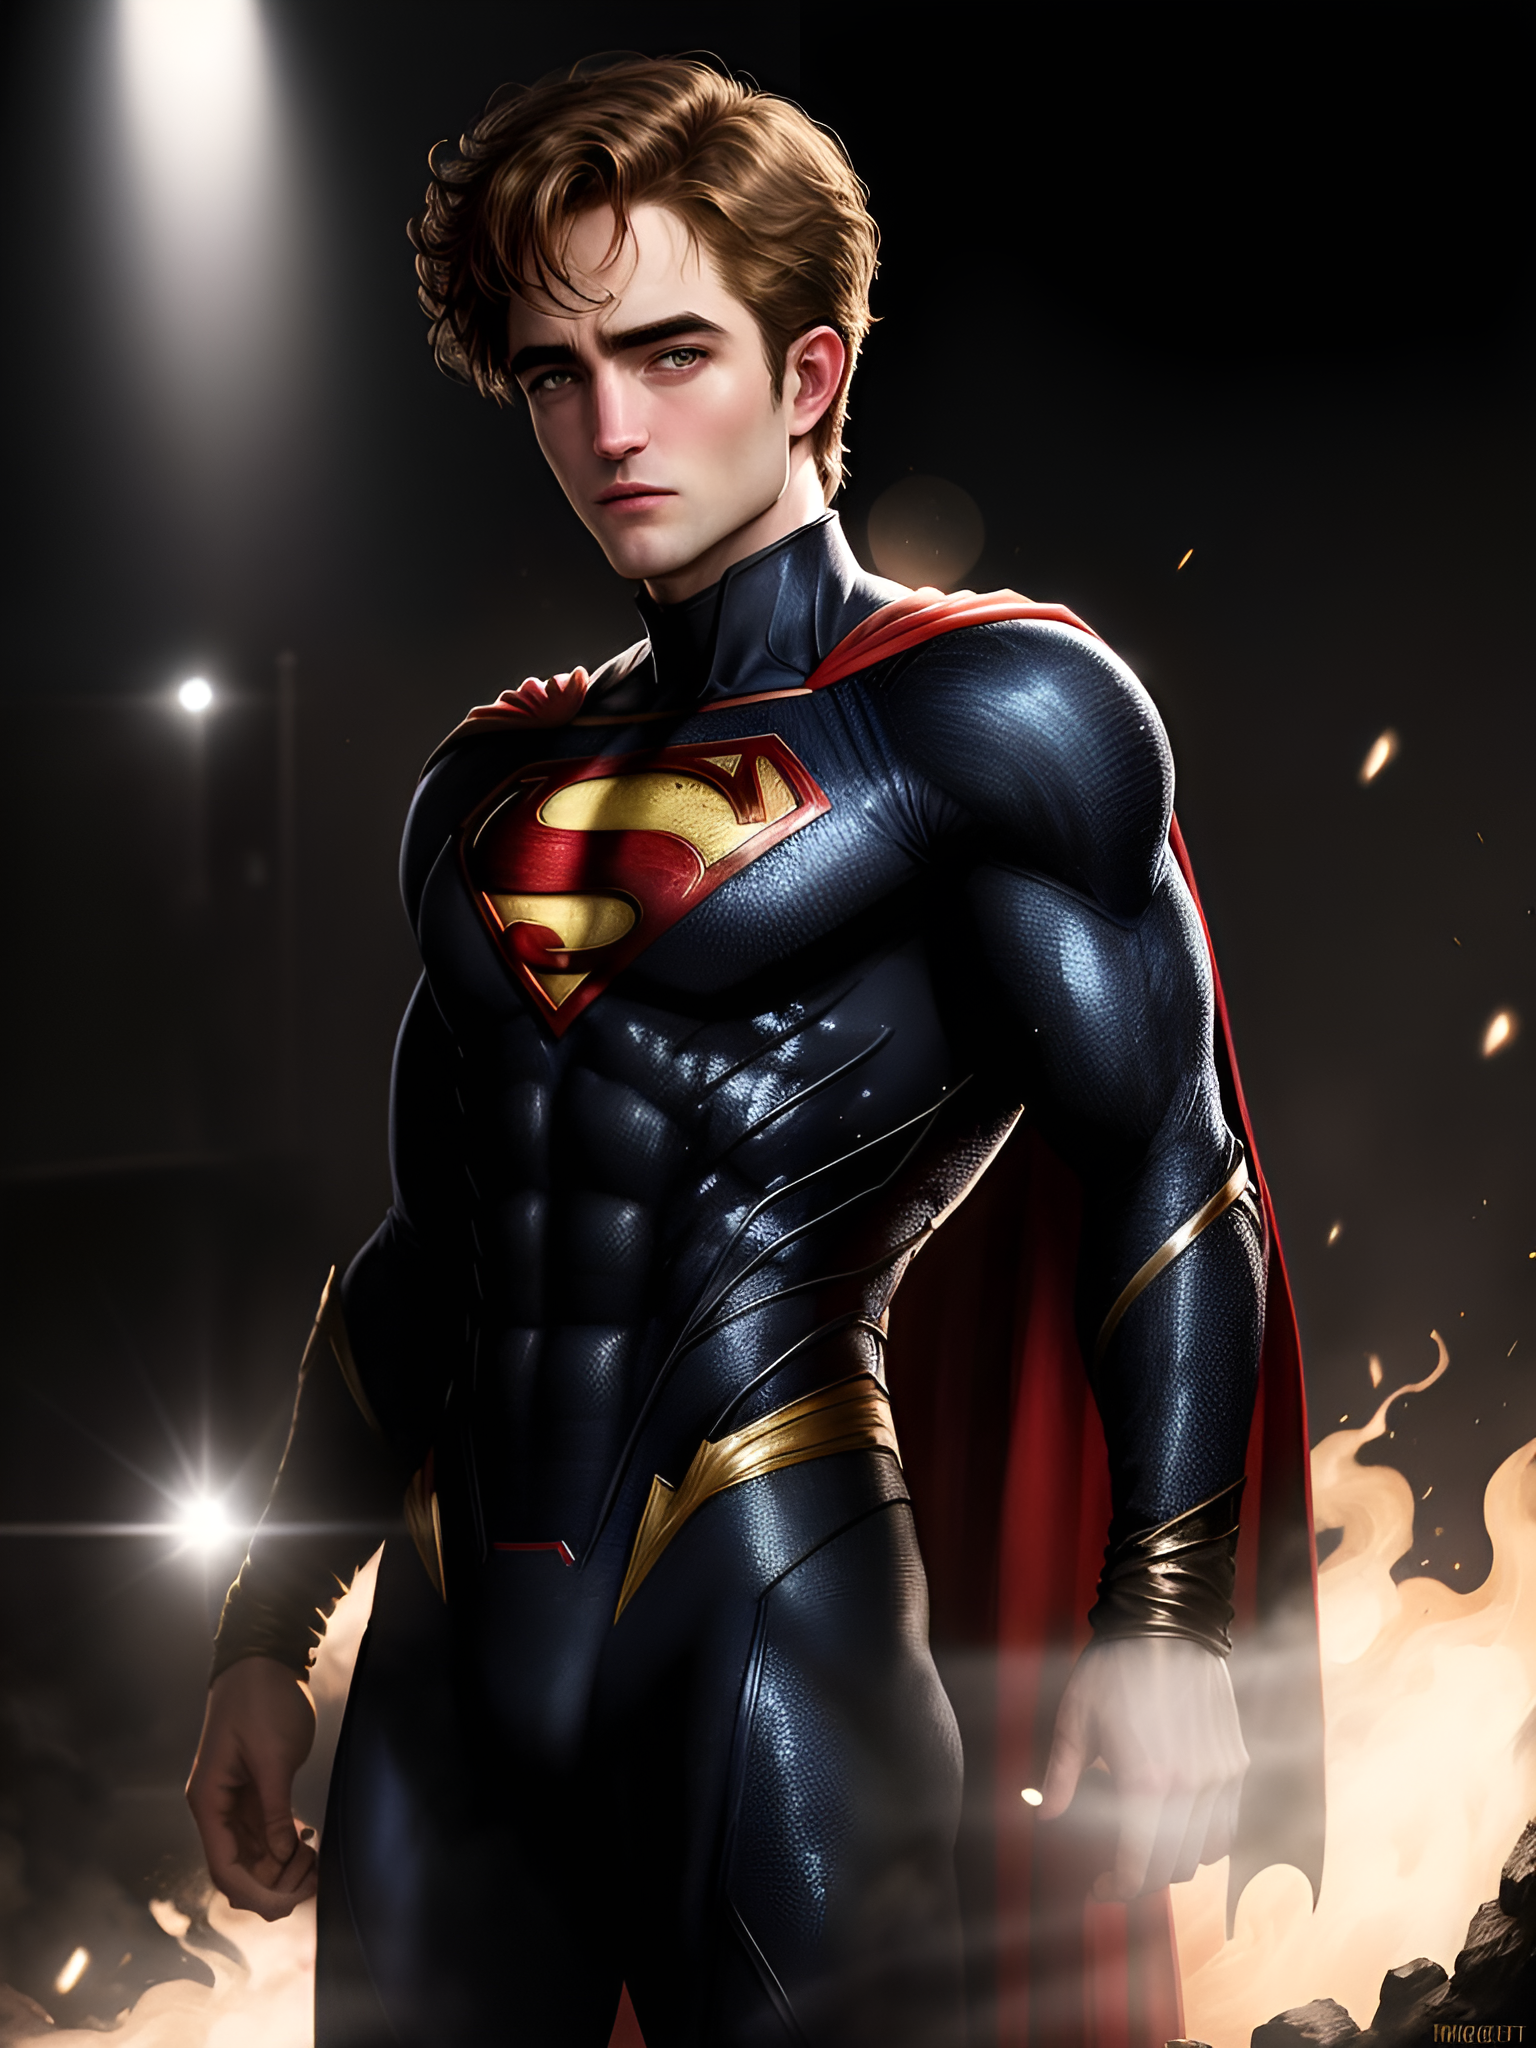 General 1536x2048 AI art DC Comics Robert Pattinson Superman portrait display superhero muscles looking at viewer cape